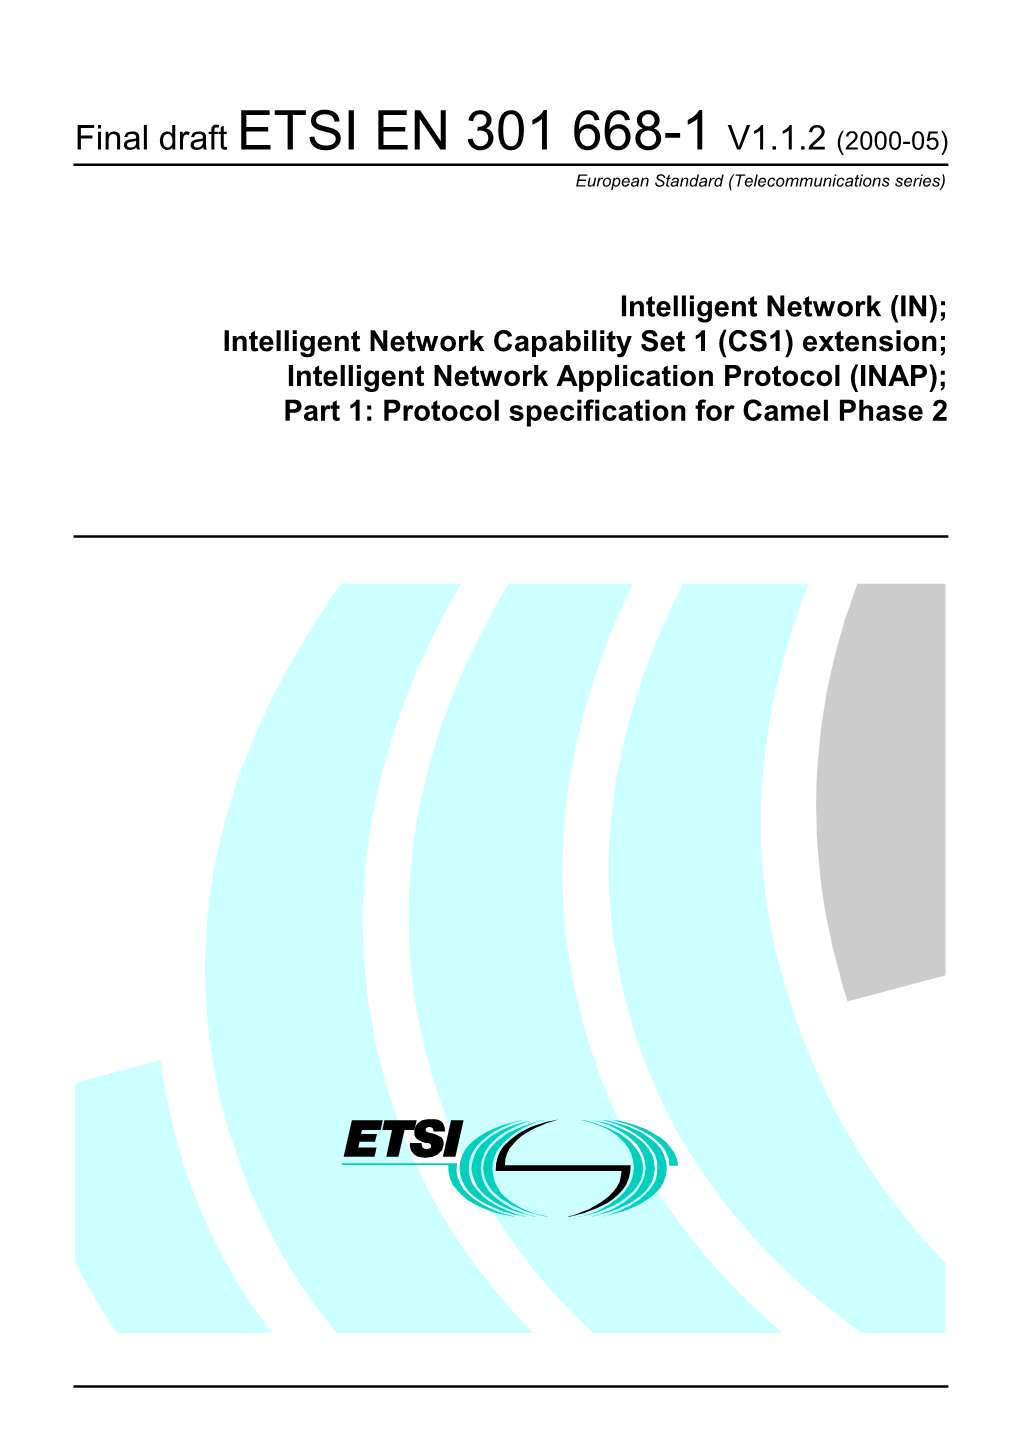 EN 301 668-1 V1.1.2 (2000-05) European Standard (Telecommunications Series)